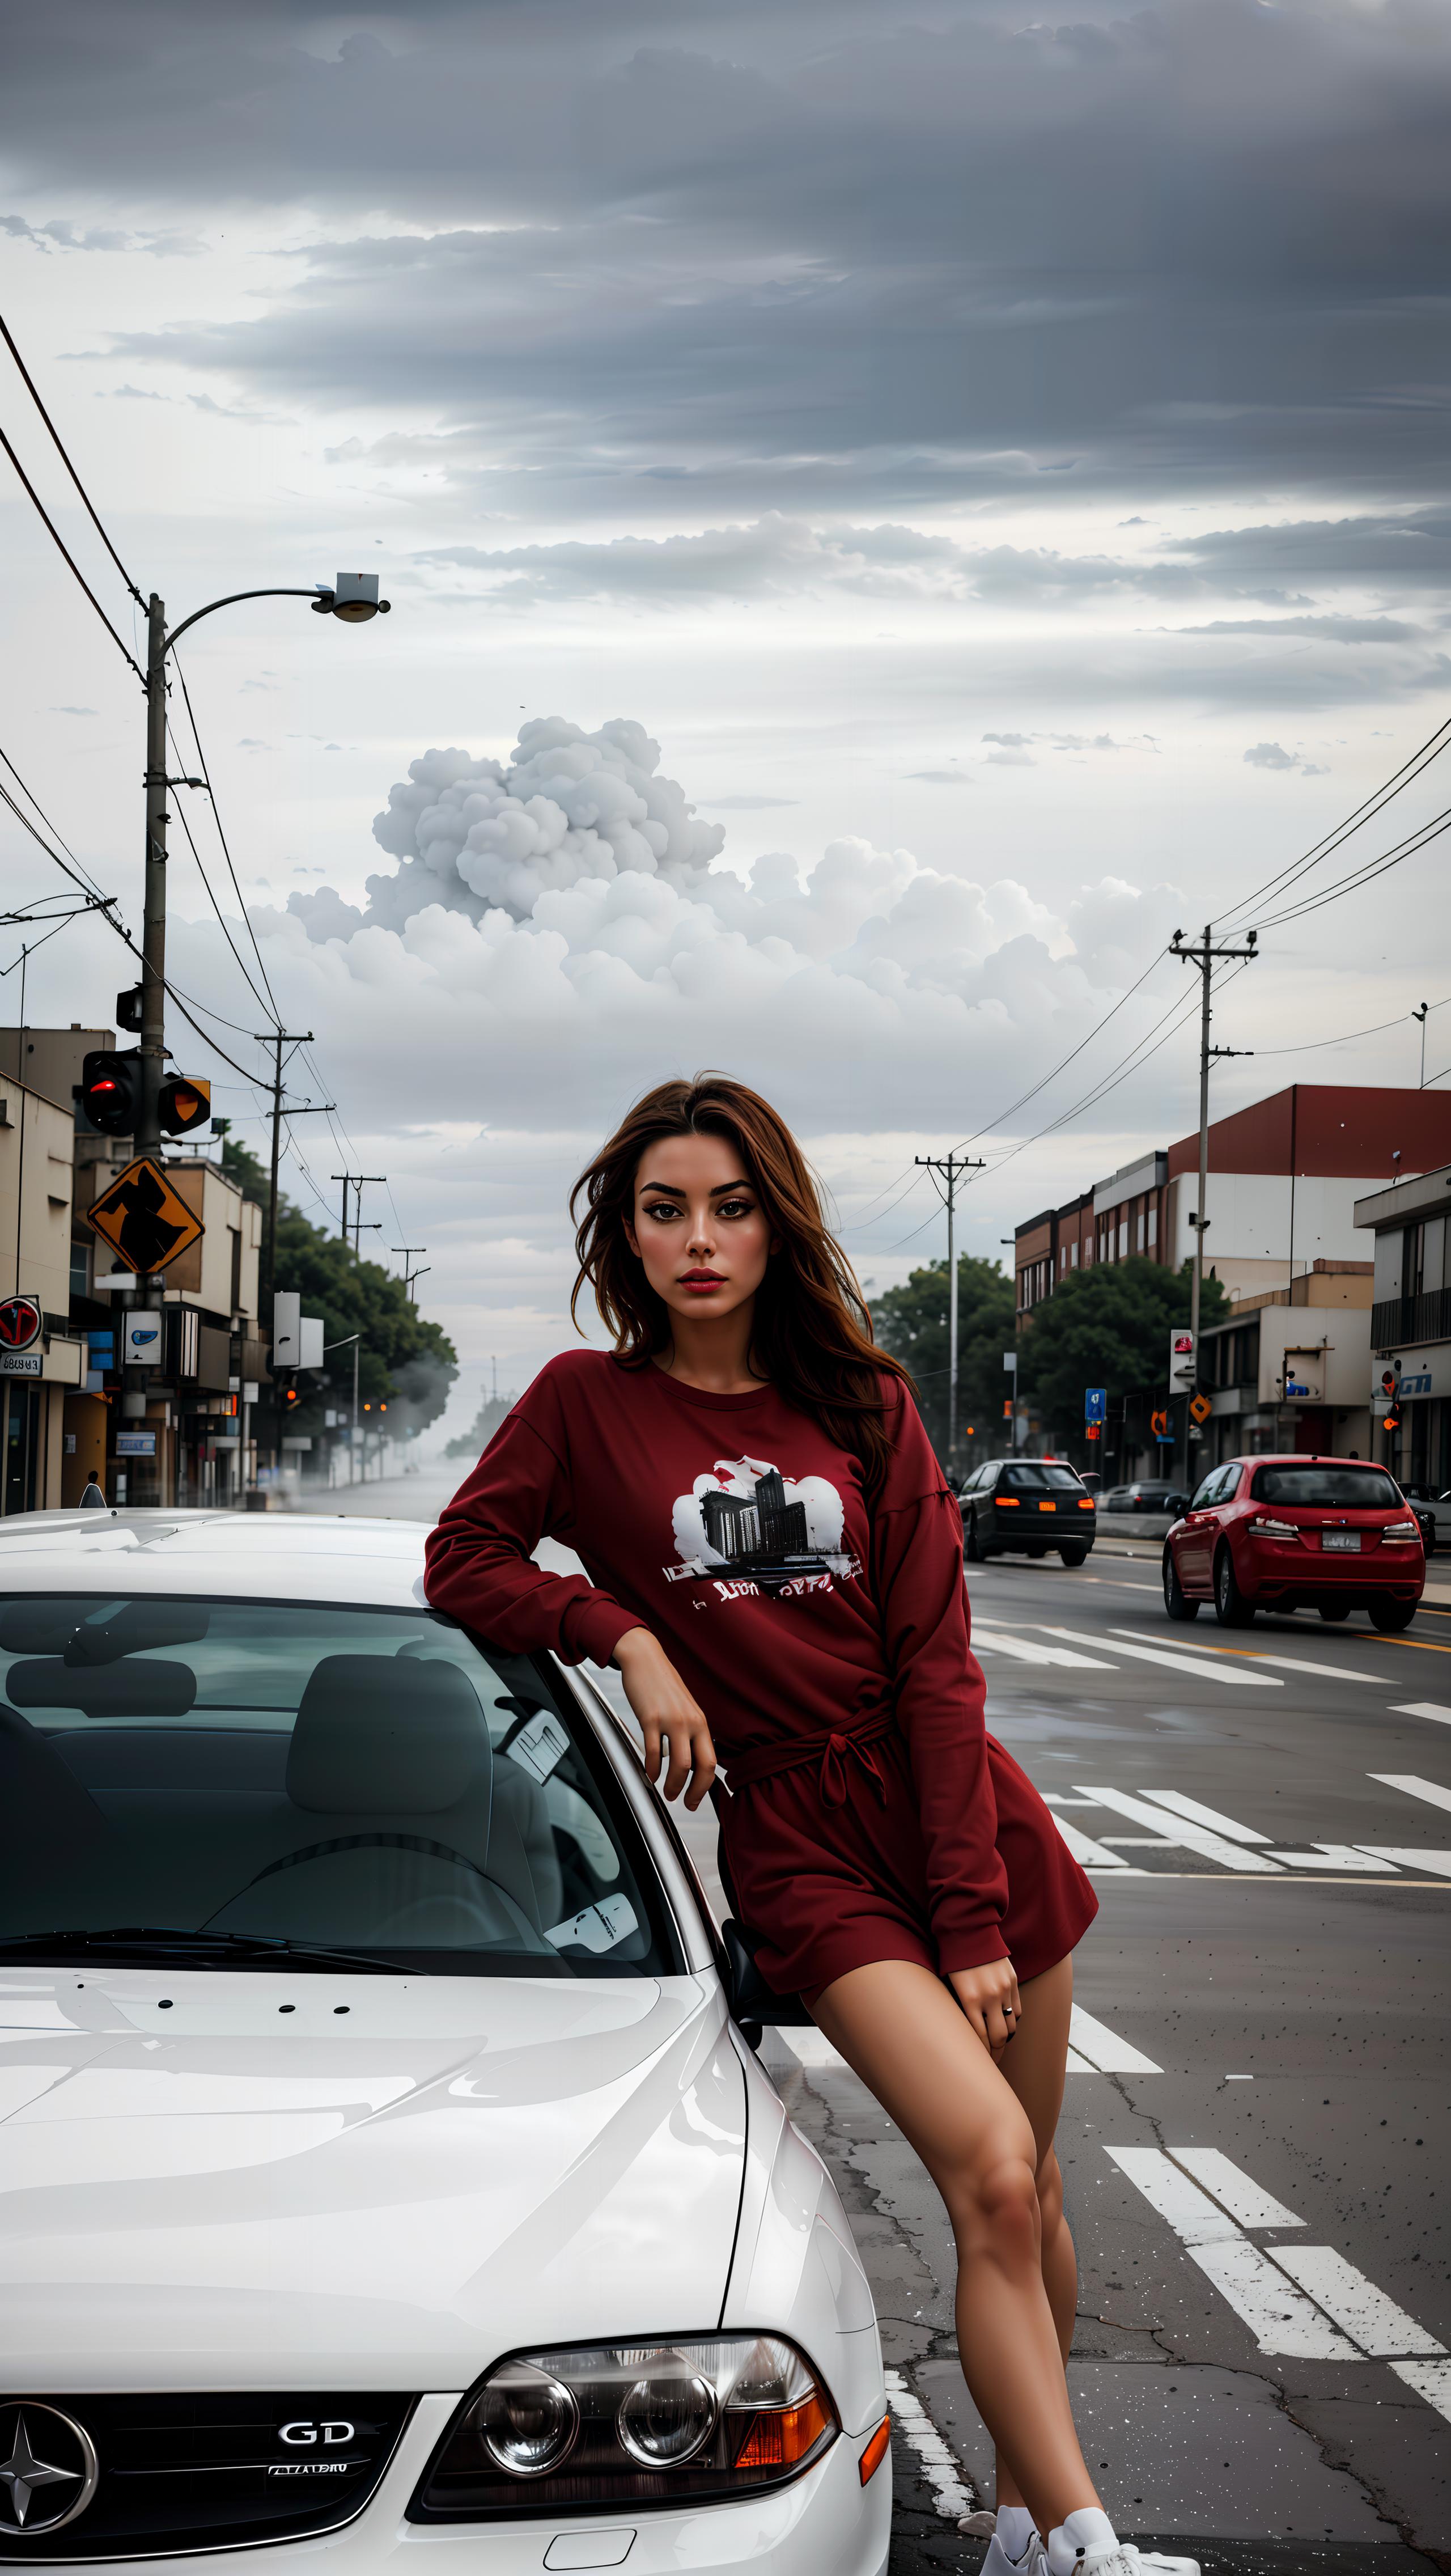 A woman posing on a street near a car.